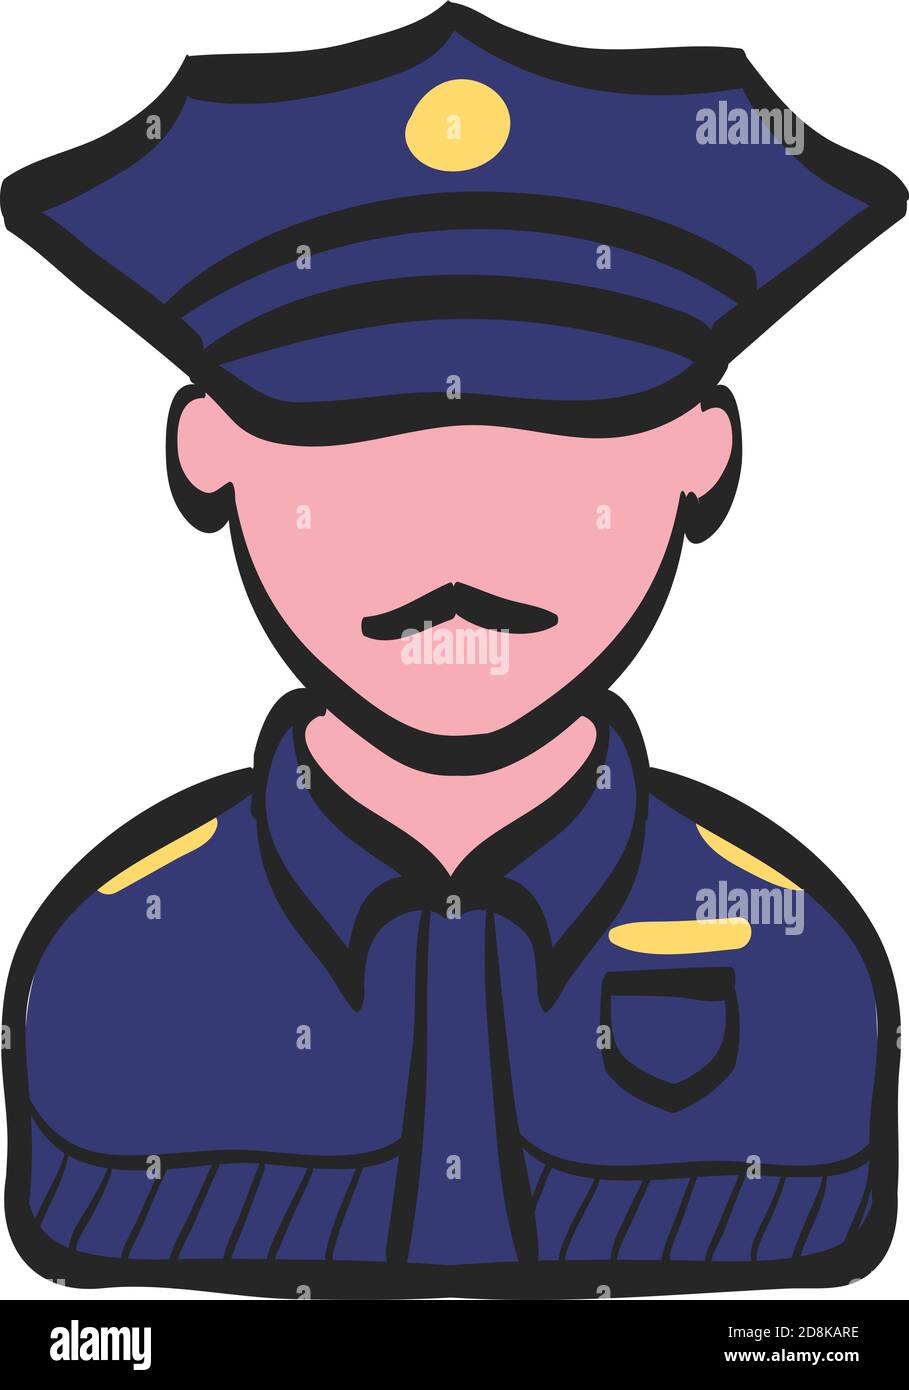 security officer cap clip art